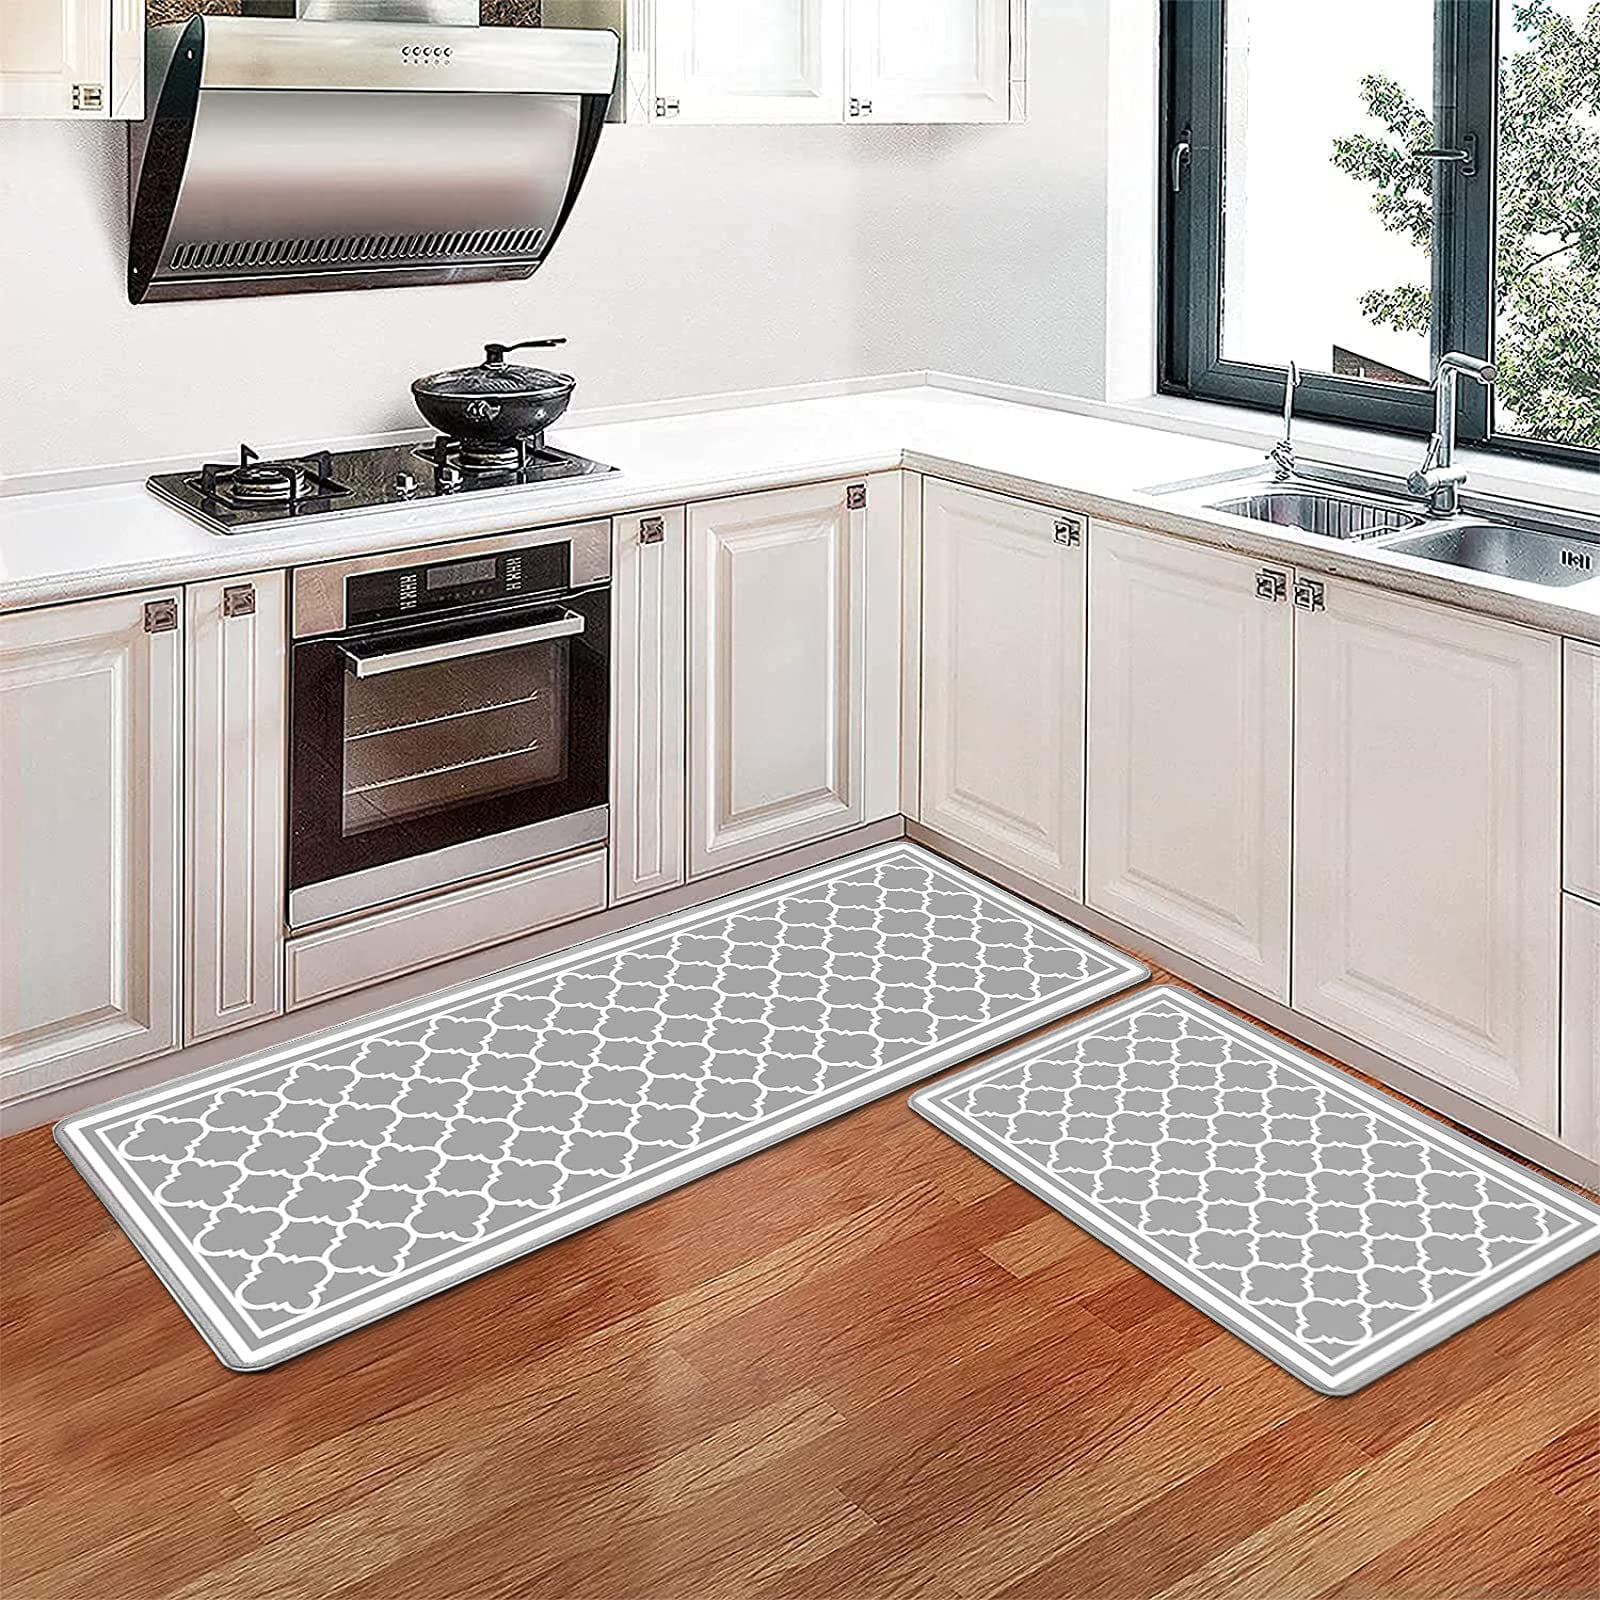 17.5 x 47inch+17.5 x 28inch;Grey Kitchen Mats Home Office 2 PCS Rug Set Non-slip Anti-Fatigue Waterproof Oil-proof Floor Mat Comfort Standing for Kitchen